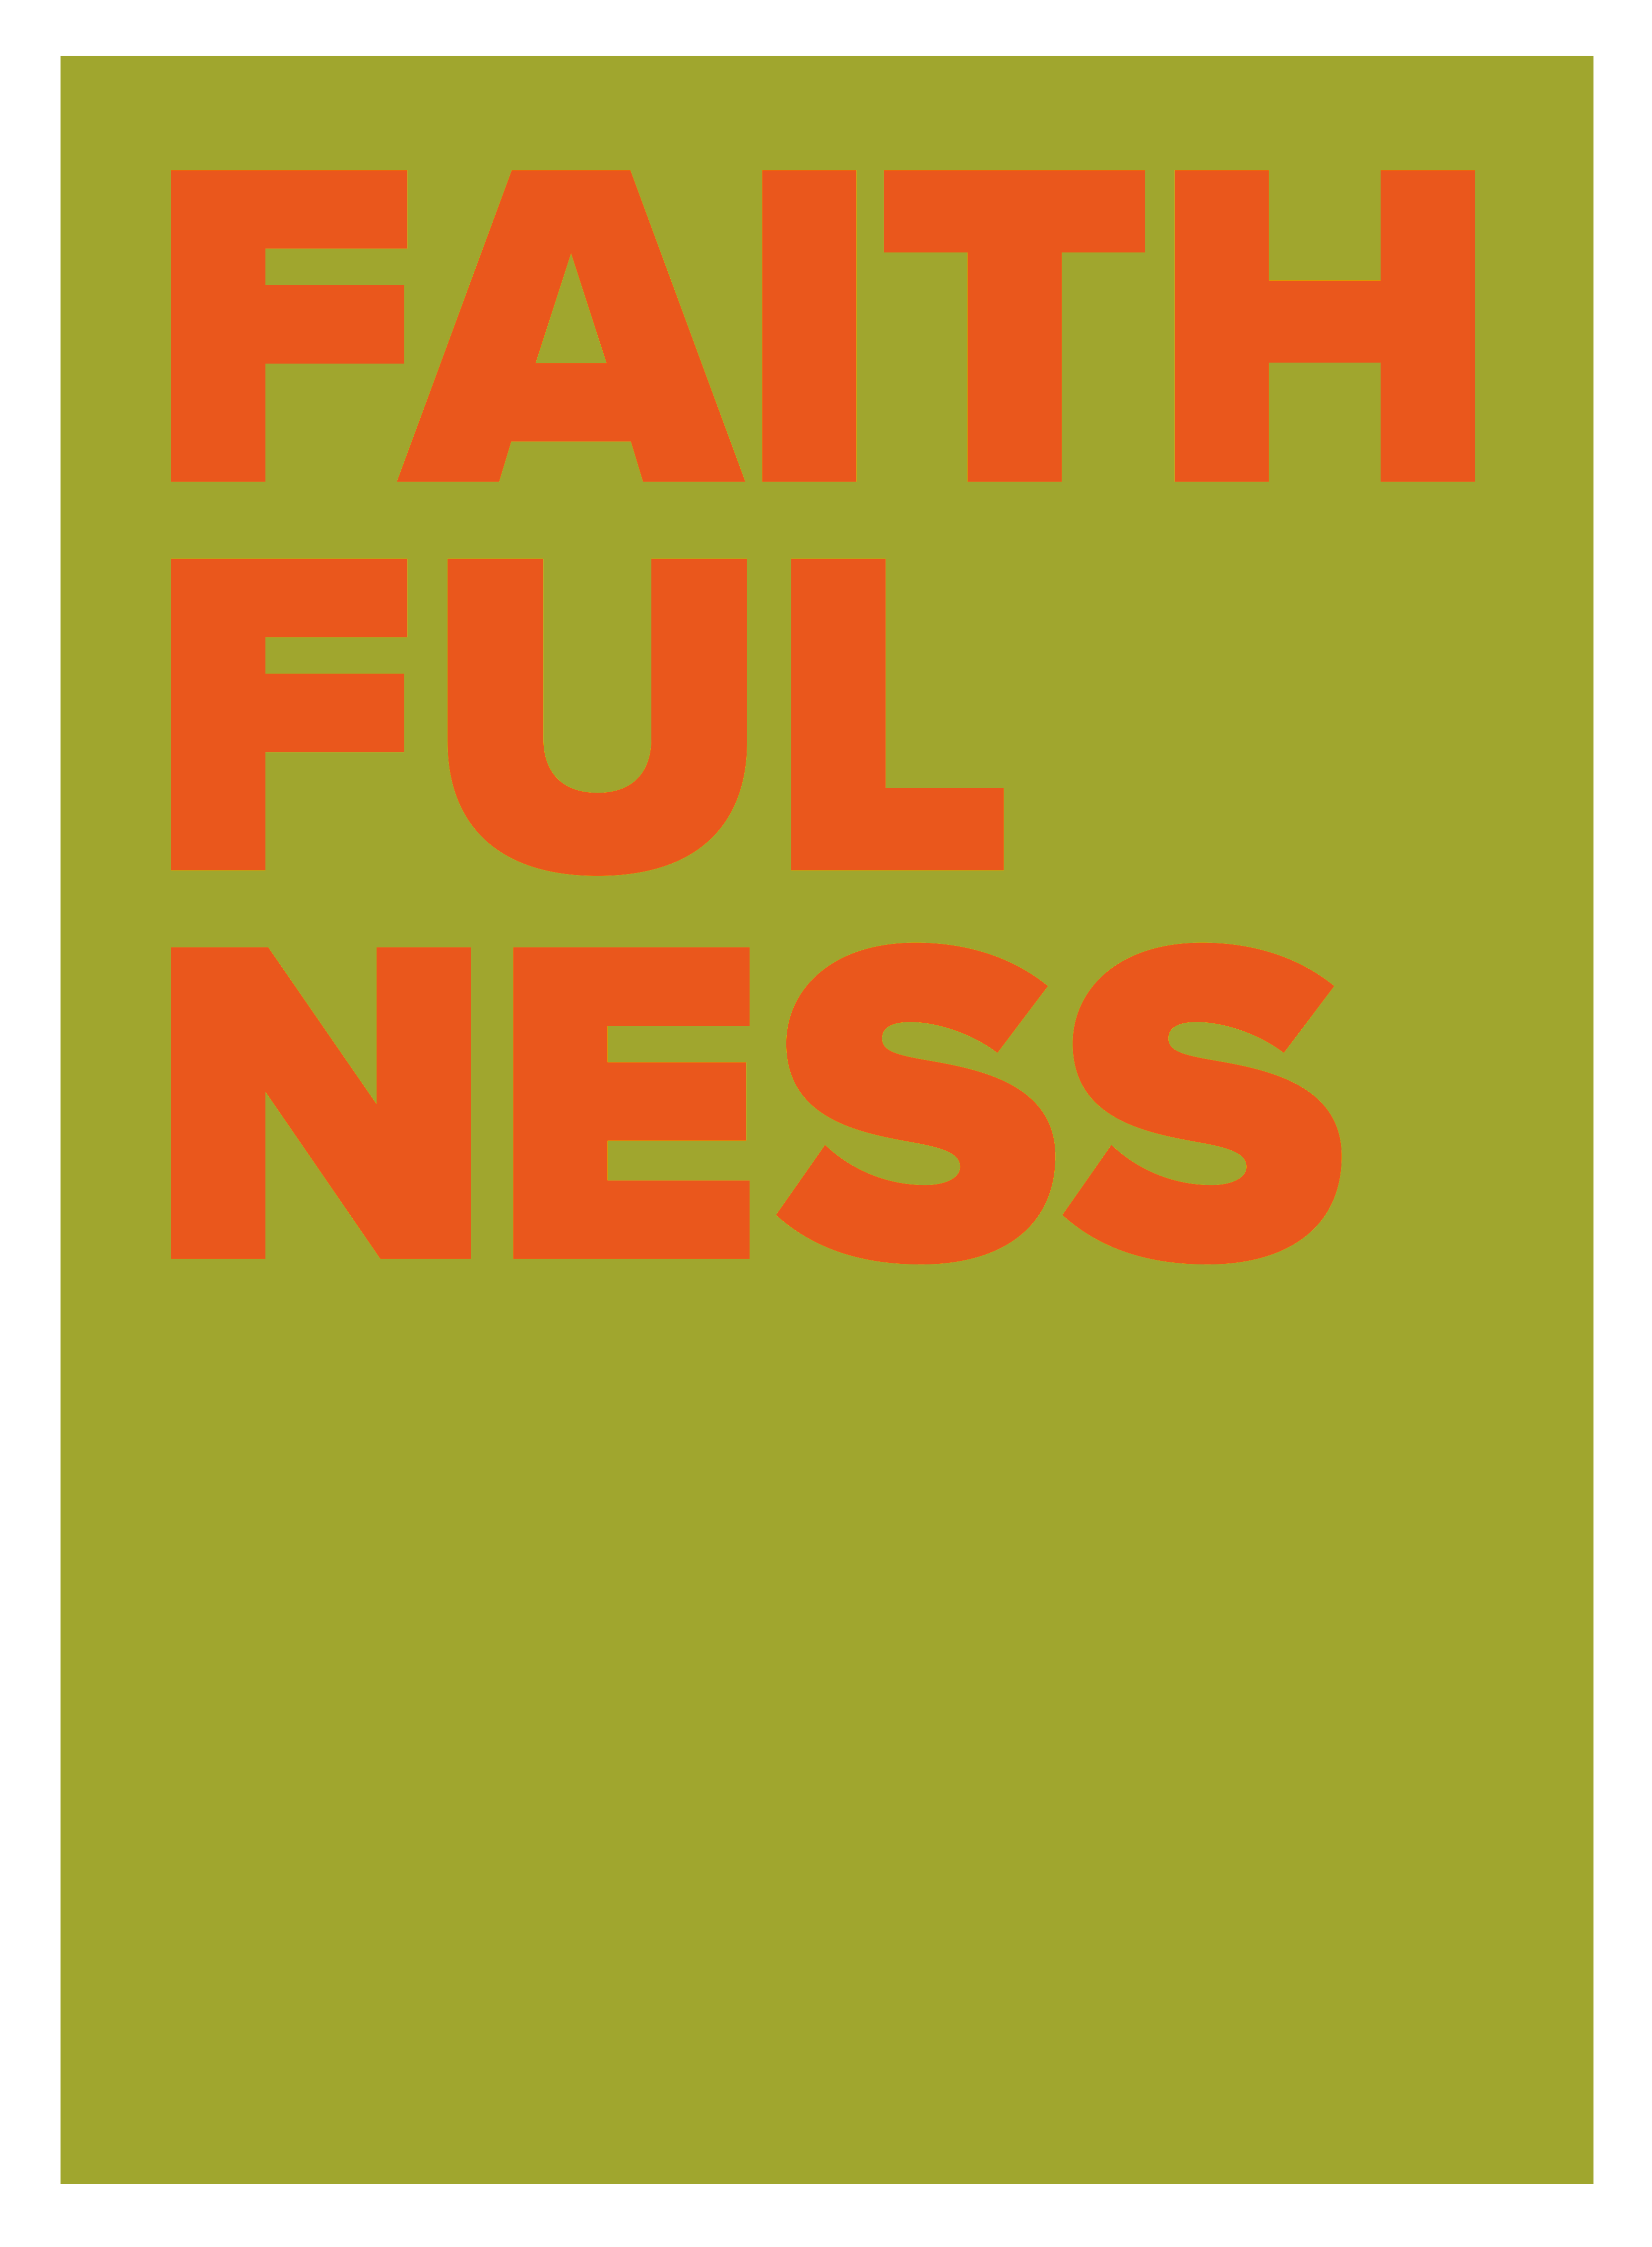 EXTRA BOLD |  FAITHFULNESS